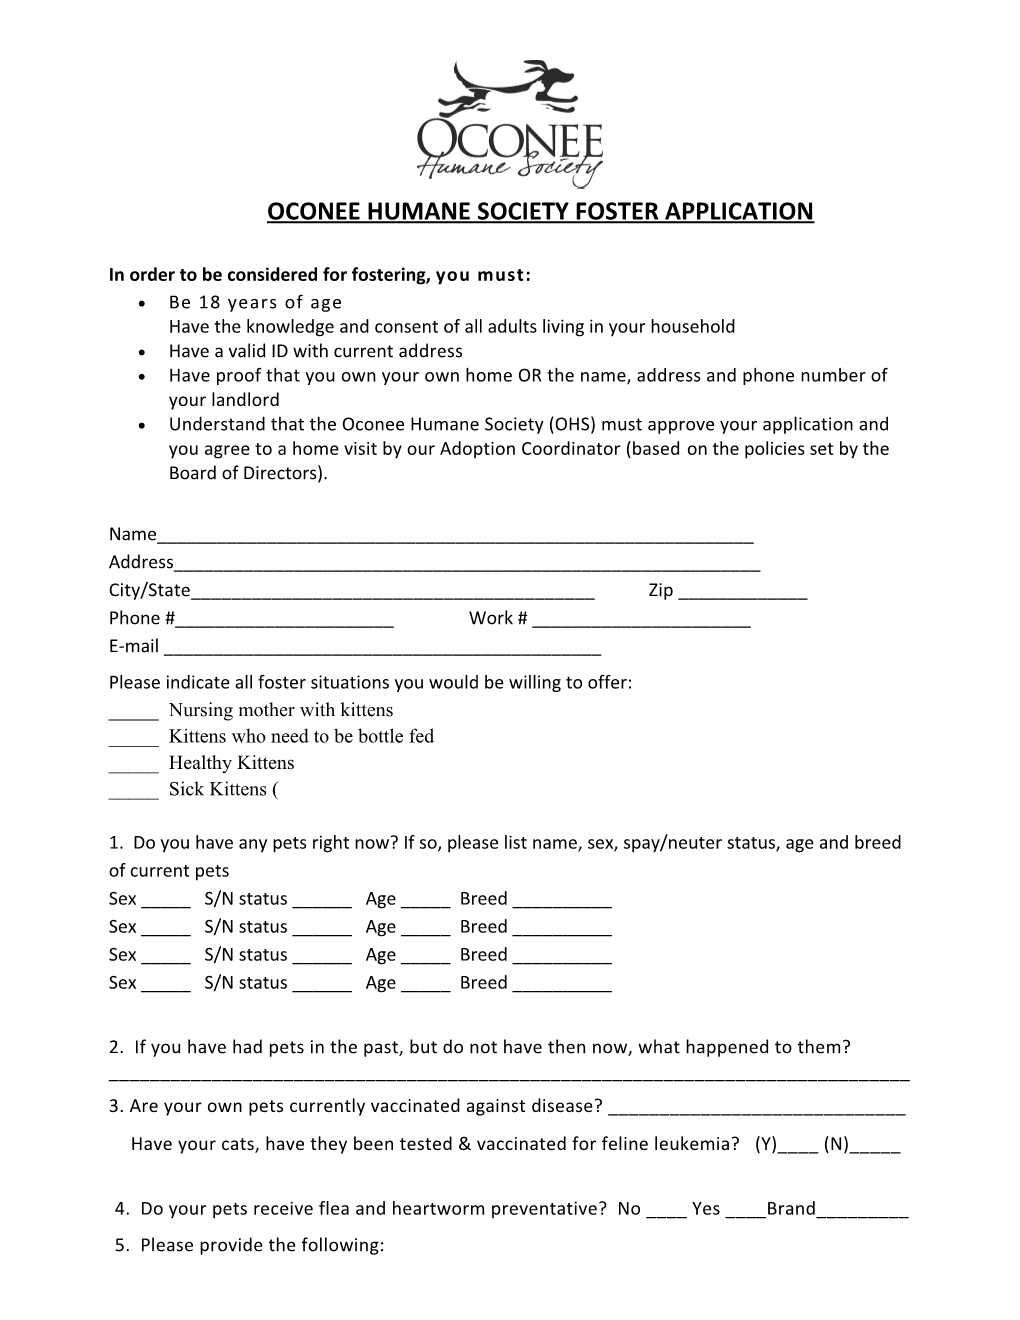 Oconee Humane Society Foster Application